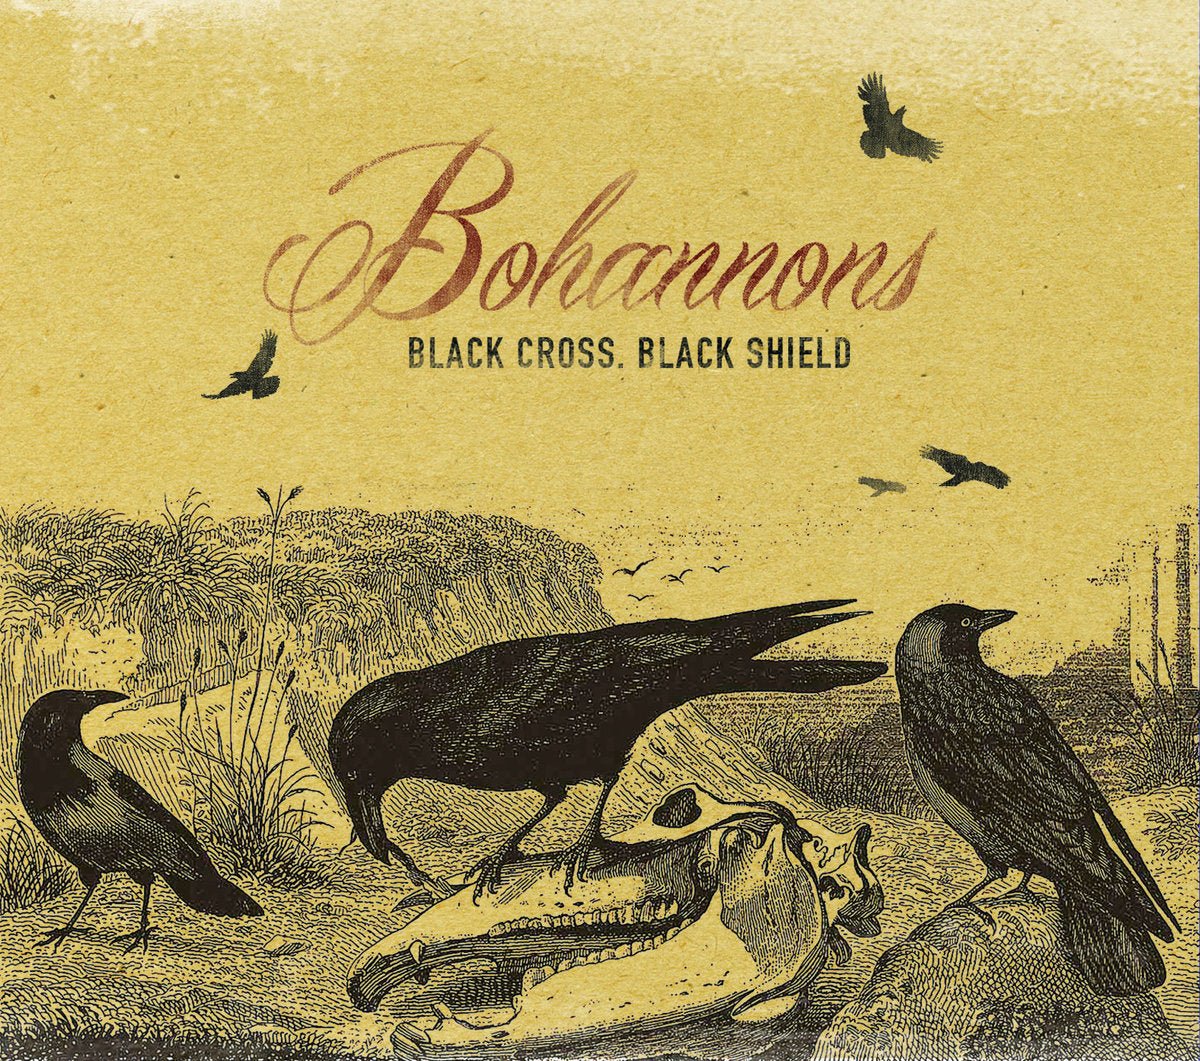 Bohannons, The - Black Cross, Black Shield (Vinyl) - 819162018248 - LP's - Yellow Racket Records